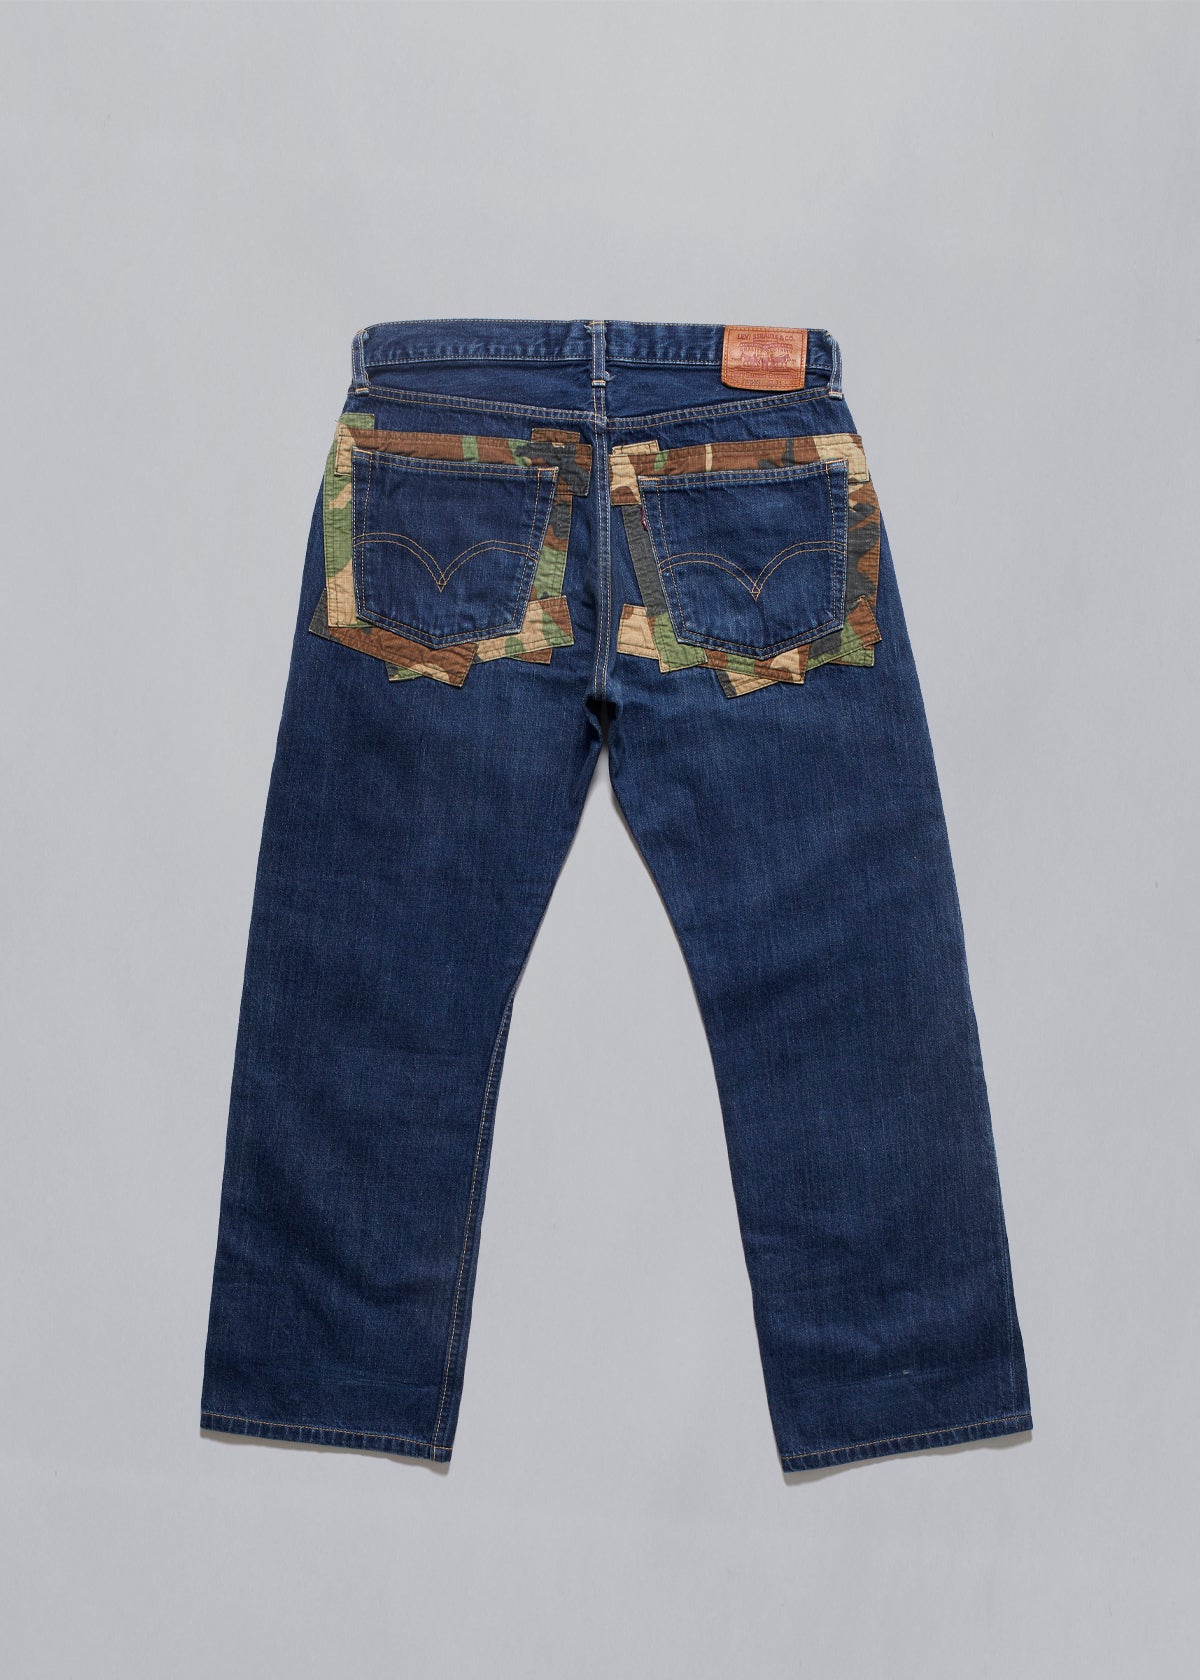 Junya Watanabe/Levi's 503 Camo Pocket Jeans AW2006 - 31